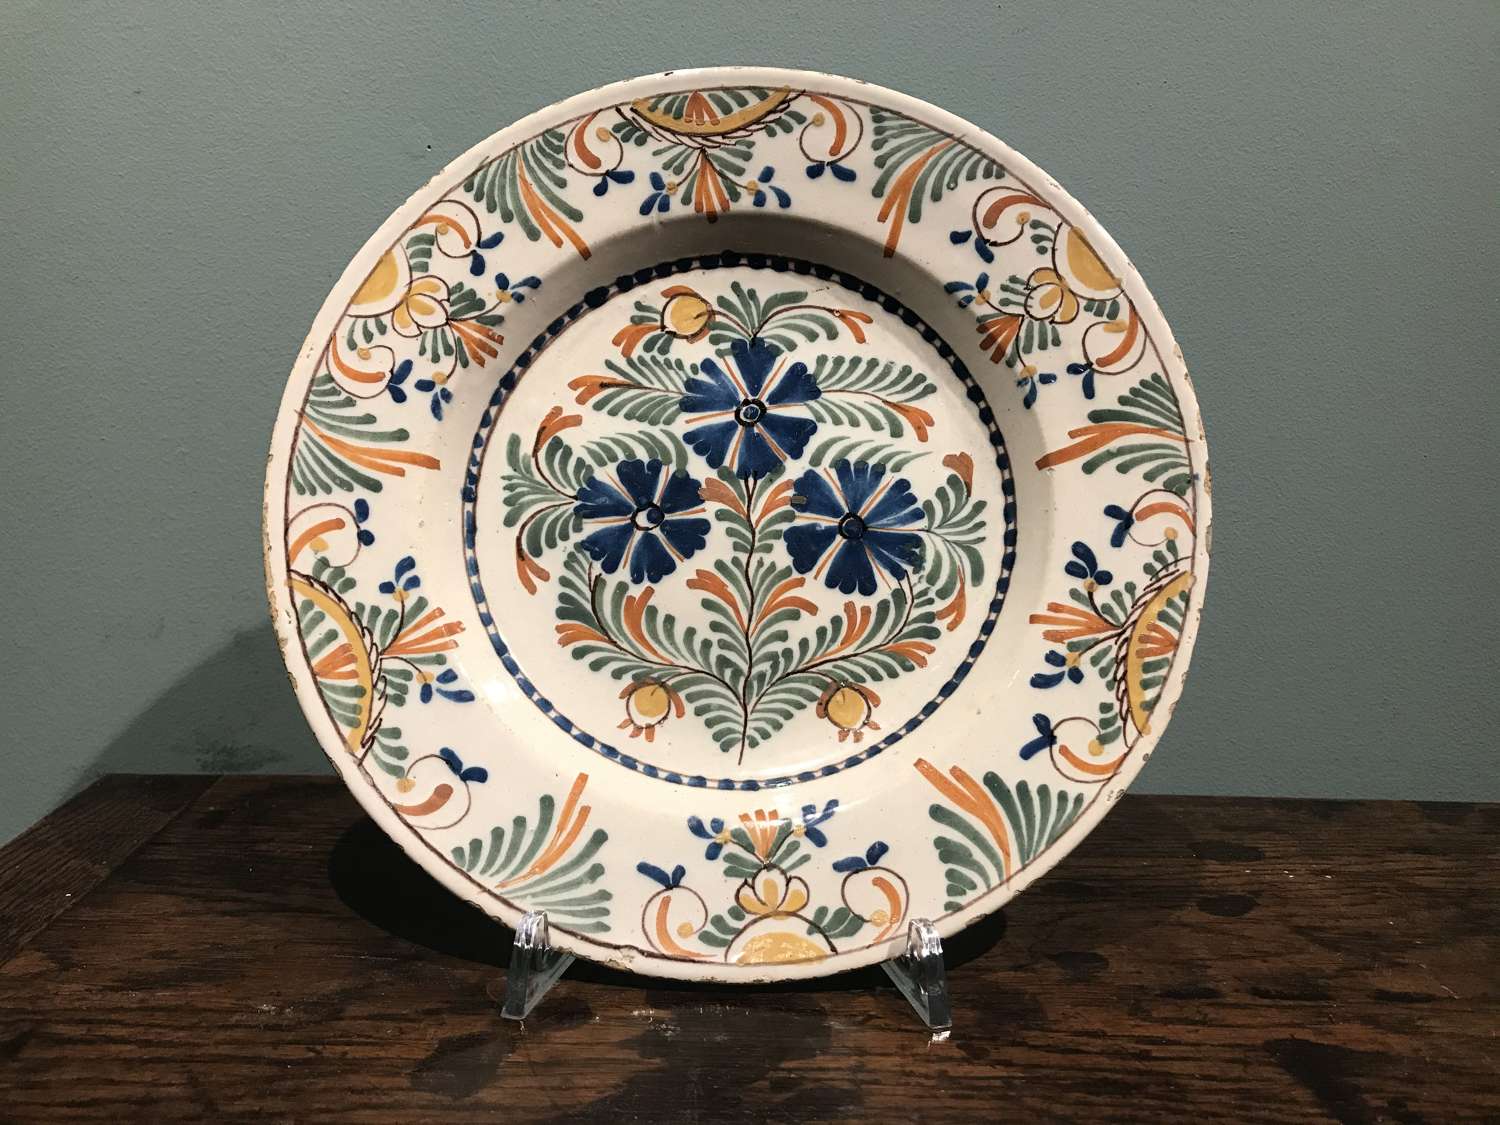 A mid 18th c. Dutch Delft polychrome plate